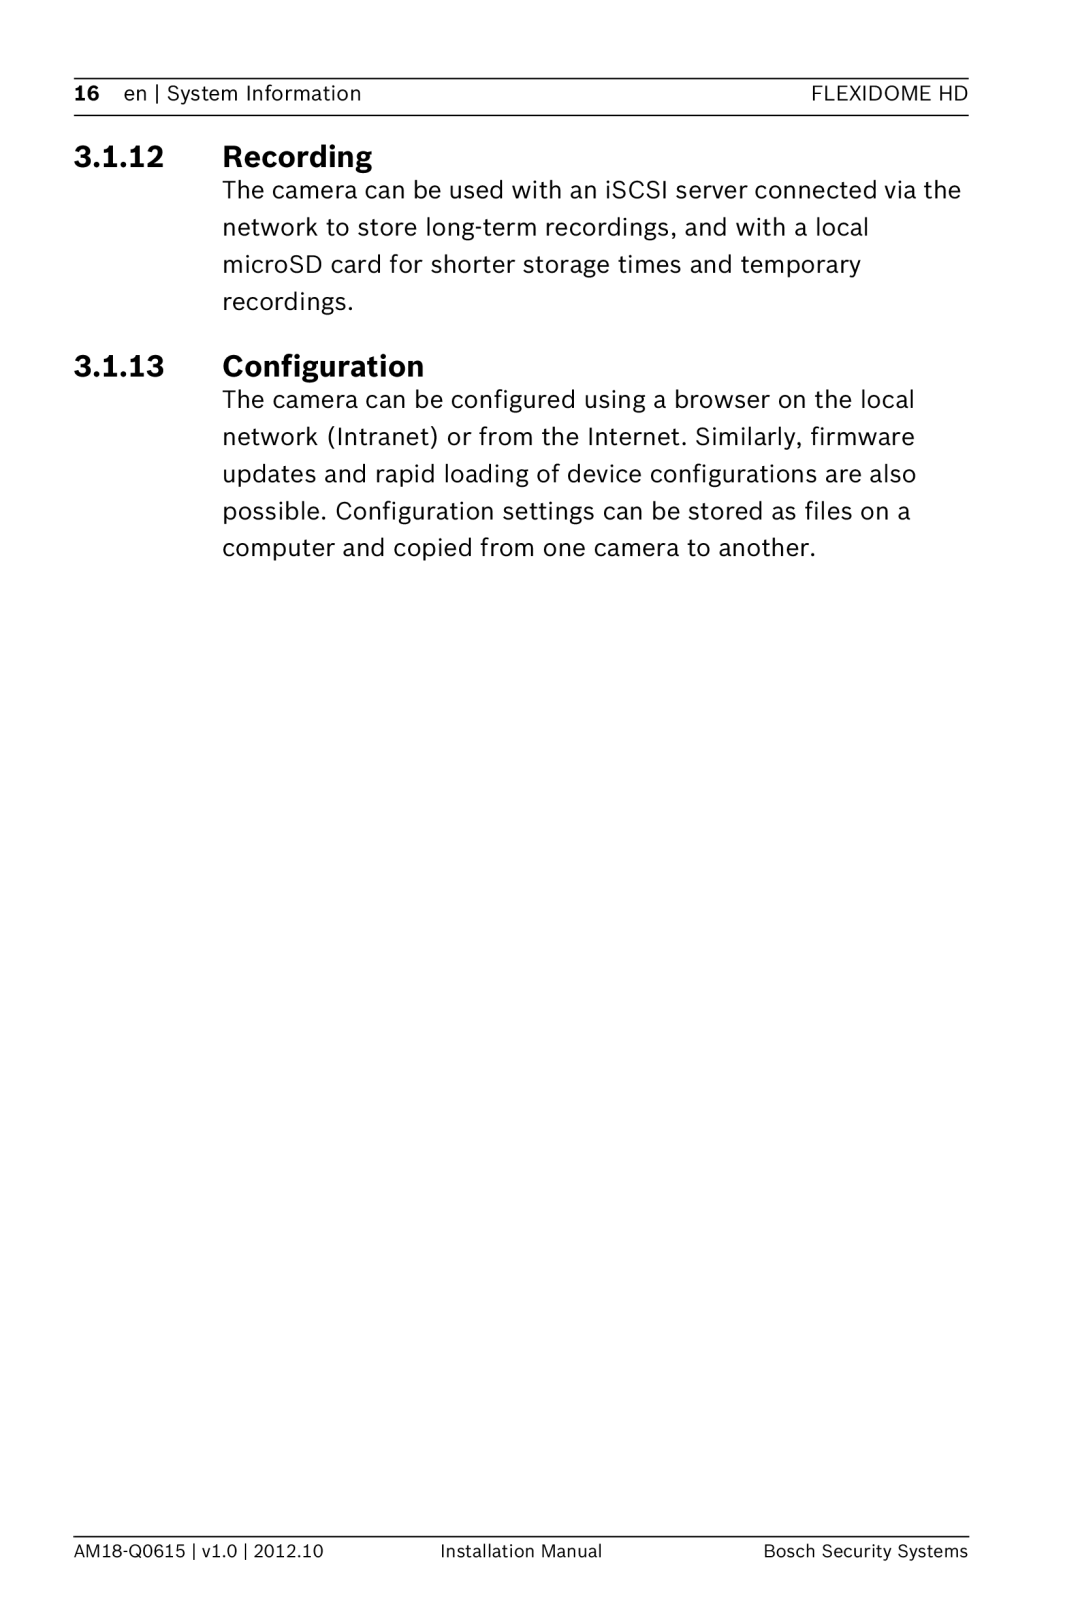 Bosch Appliances NDN-733 installation manual 3.1.12Recording, 3.1.13Configuration, en System Information, Flexidome Hd 